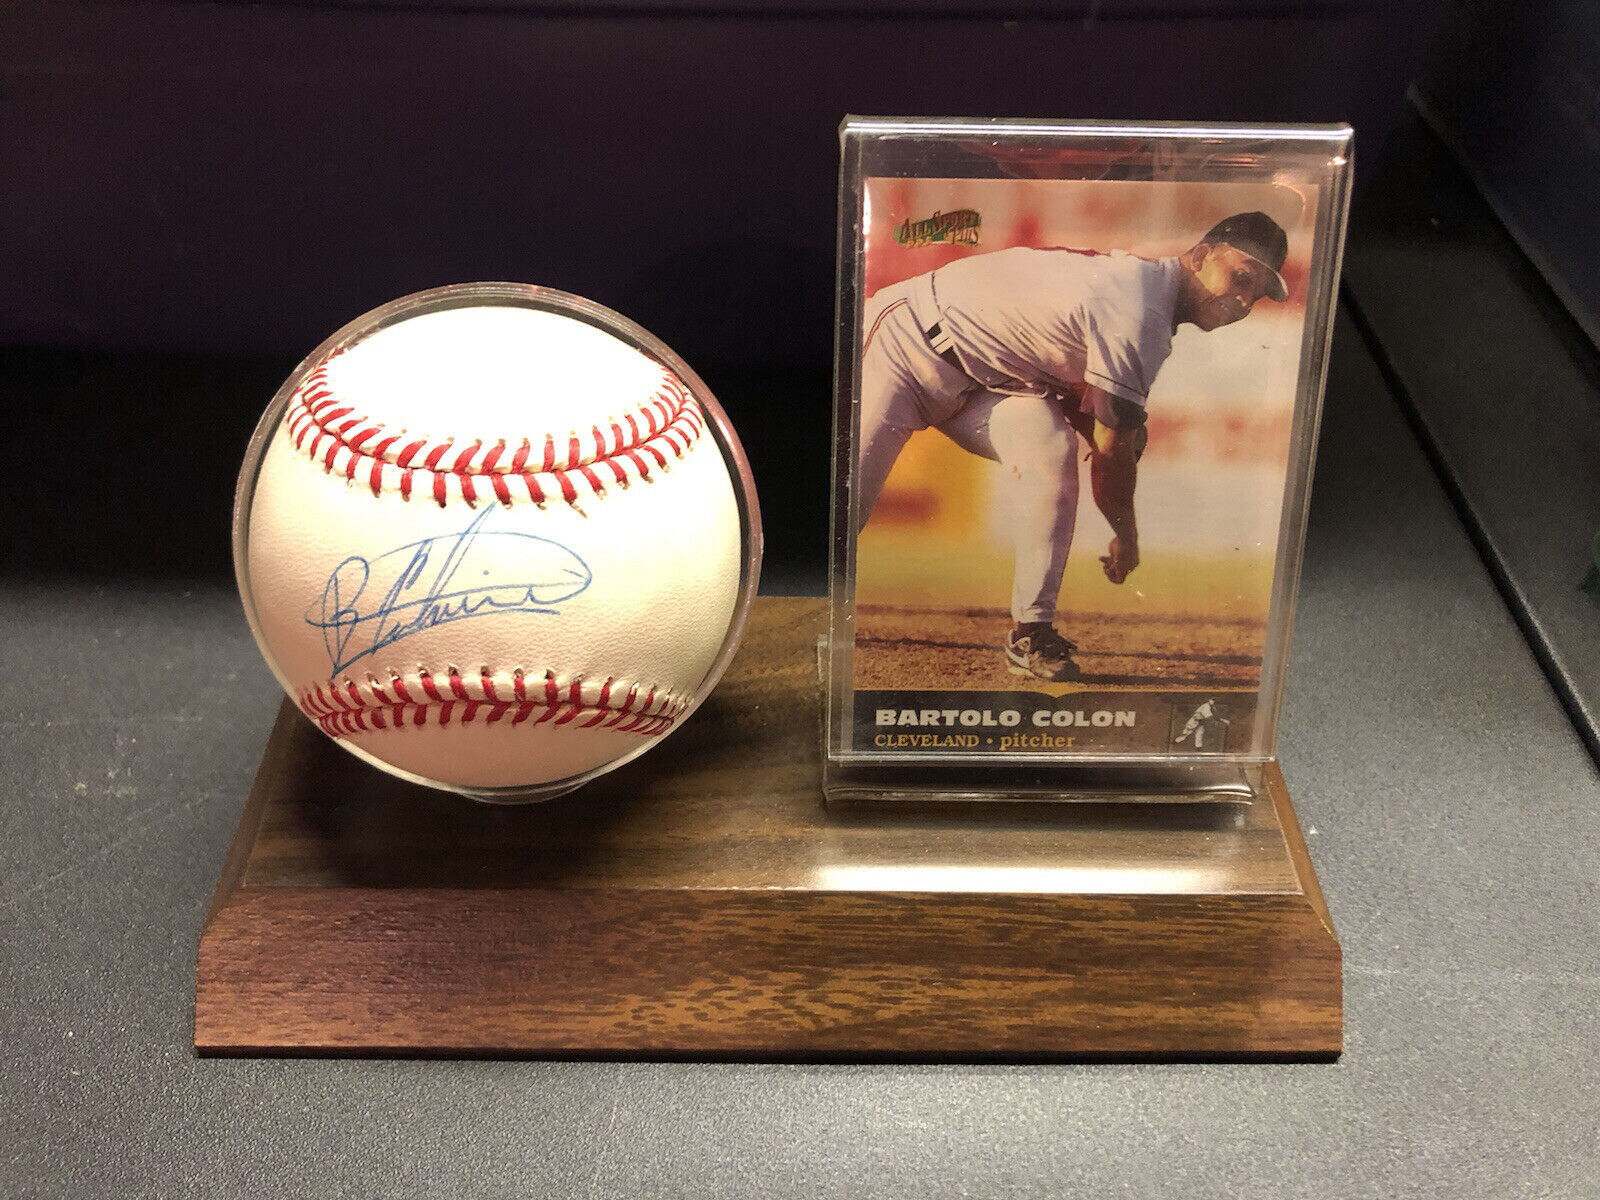 Bartolo Colon Autographed OAL Baseball with Display Holder.